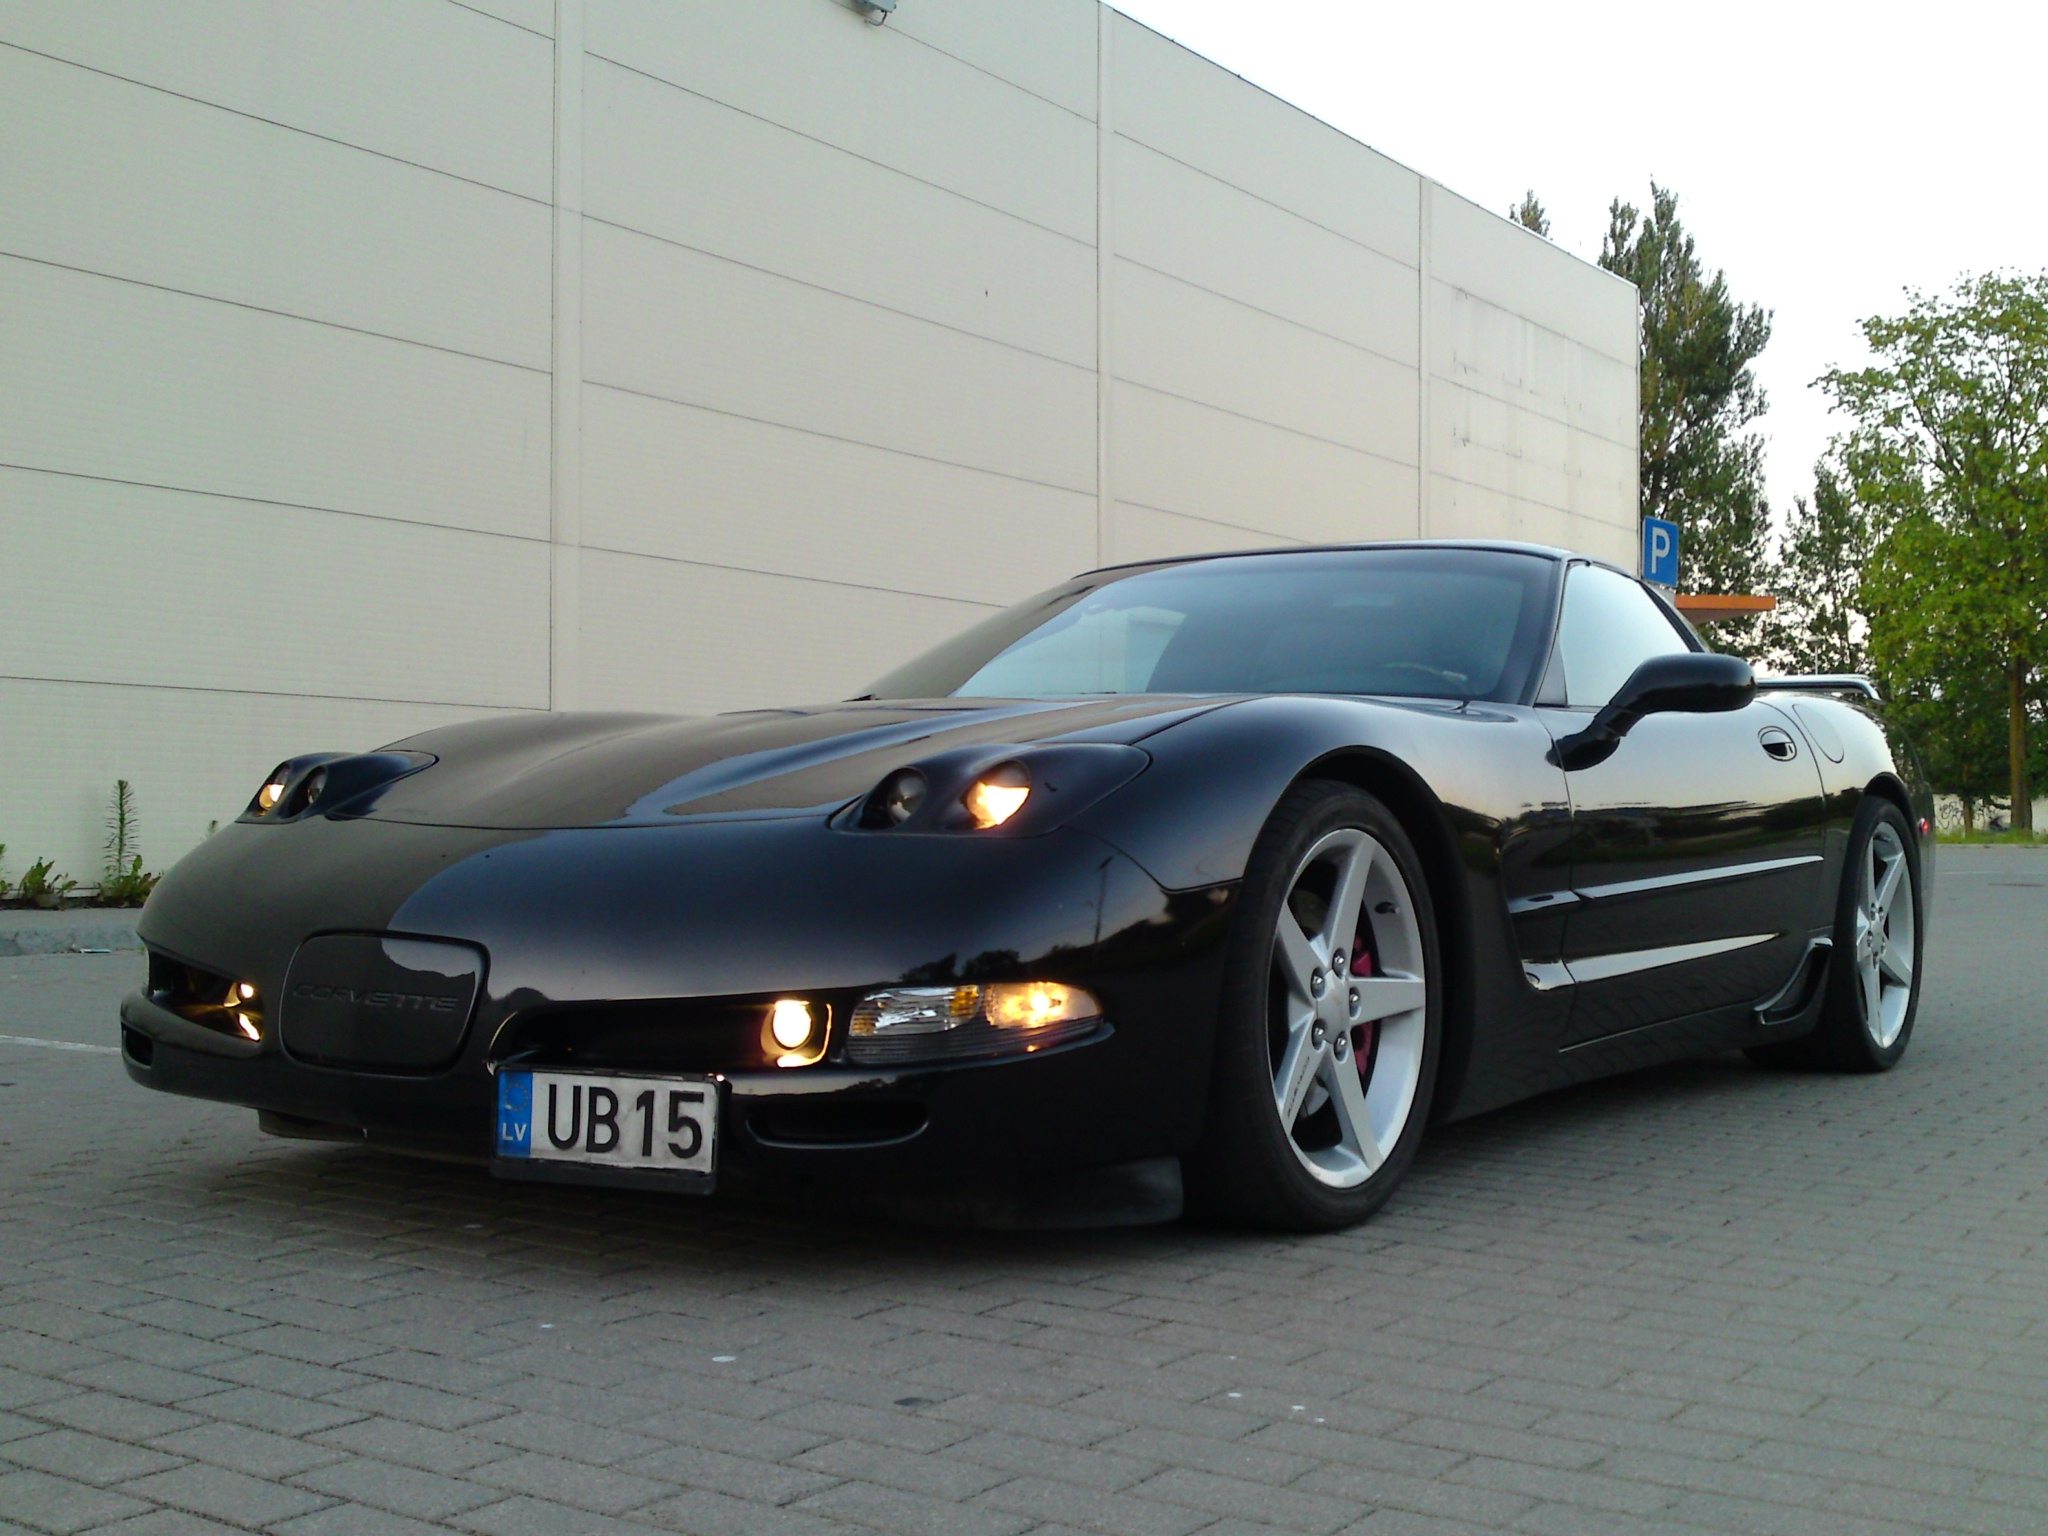 2000 C5 Corvette Image Gallery & Pictures